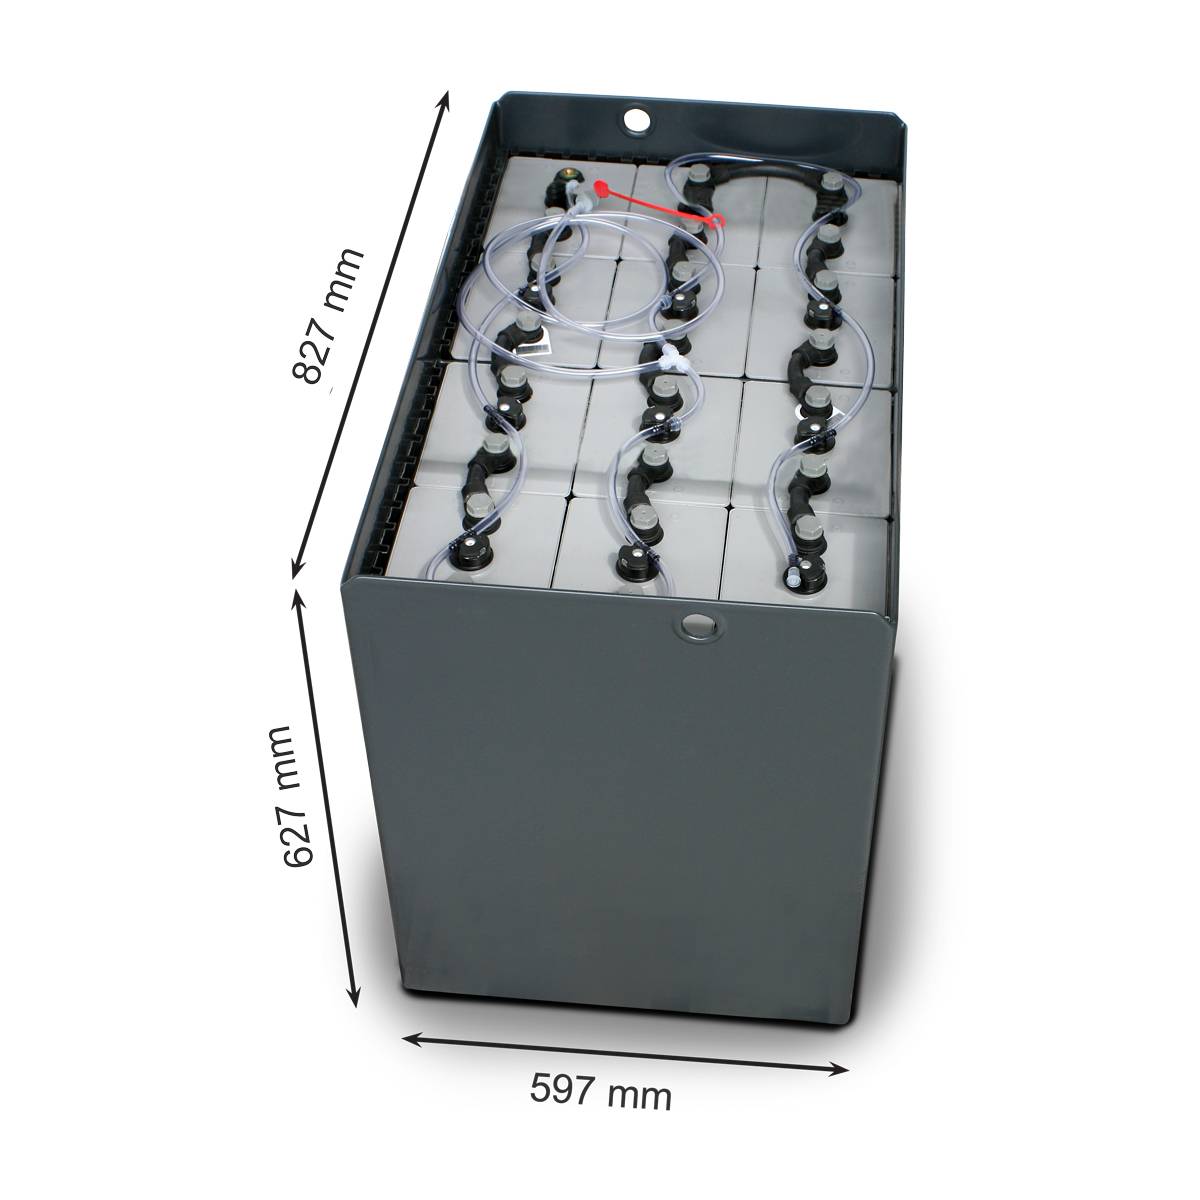 24V Gabelstaplerbatterie 10 PzS 1150 Ah DIN A (827 * 597 * 627mm L/B/H) Trog 57014041 inkl. Aquamatik von Q-Batteries